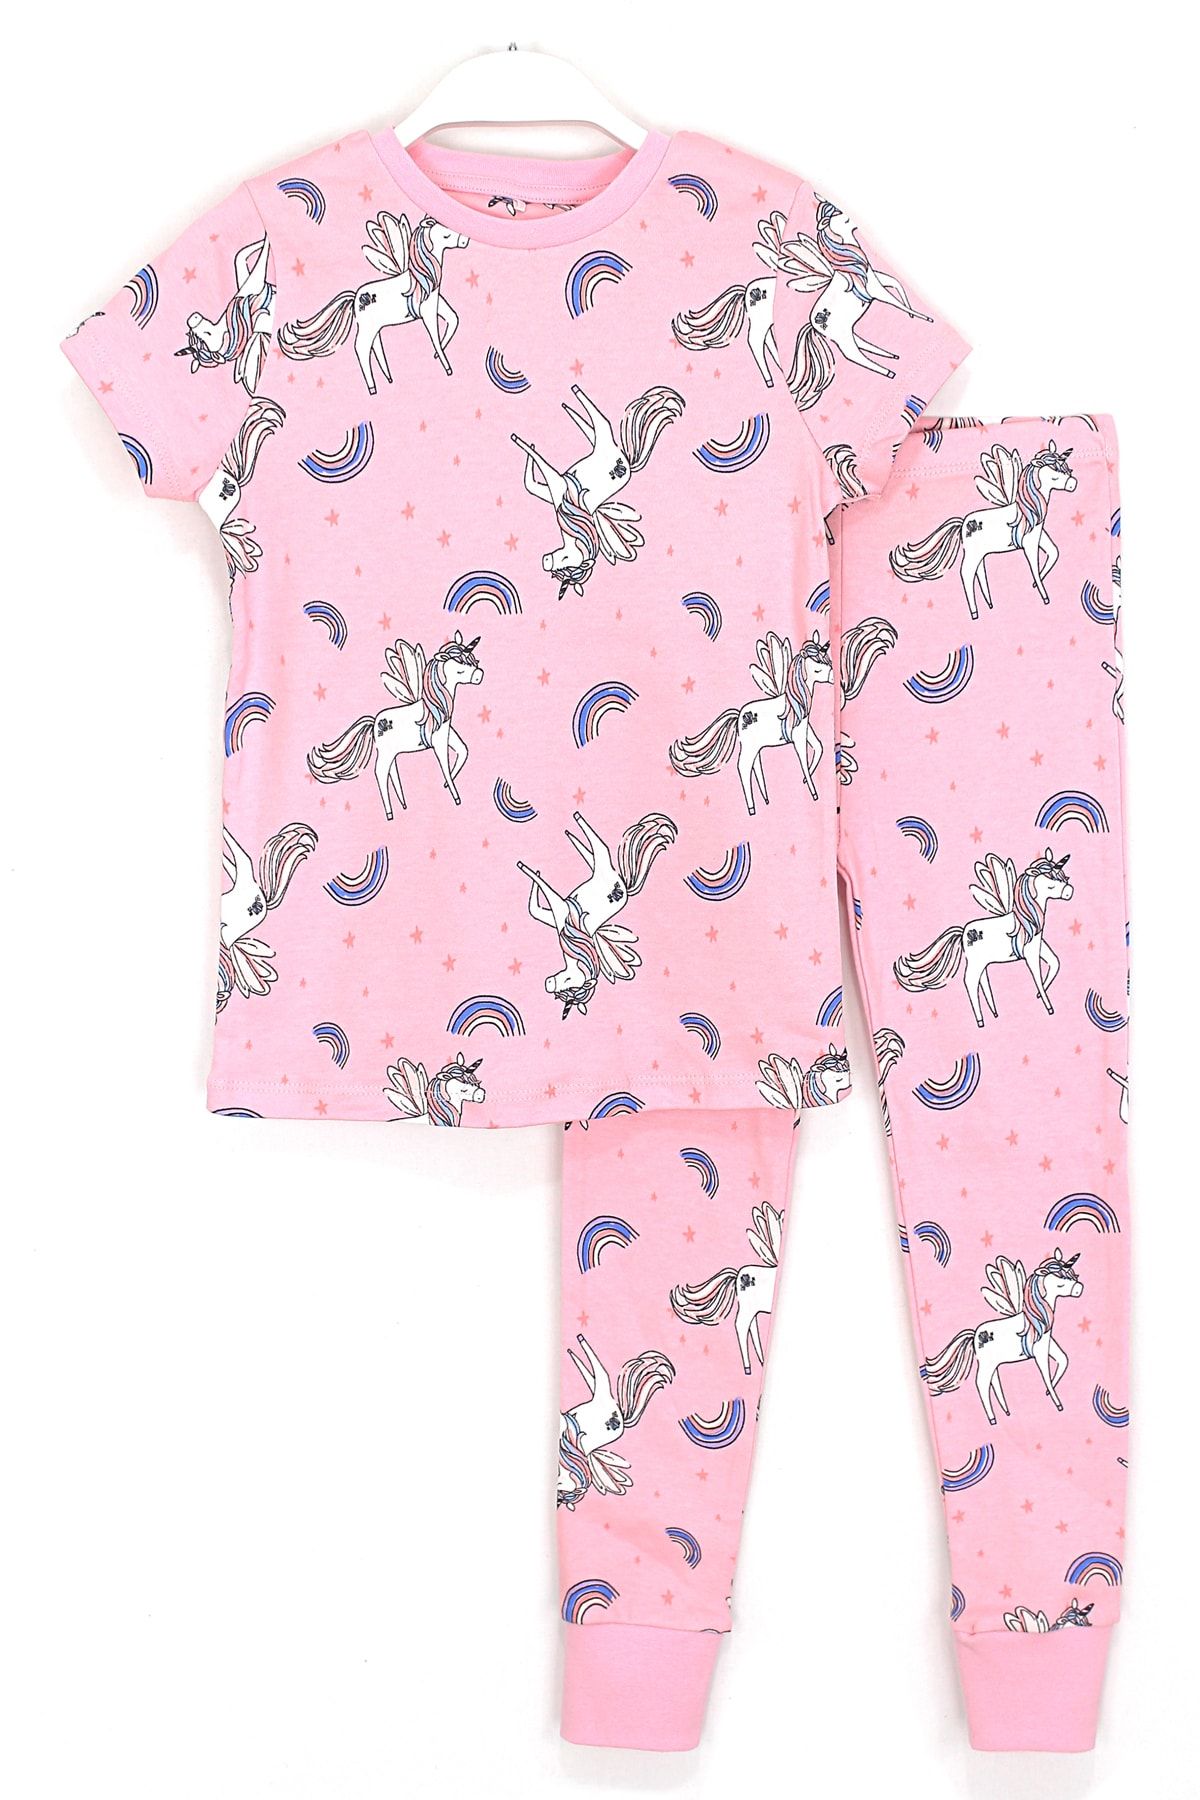 DobaKids Kız Çocuk Pembe Unicorn Desenli Pijama Takımı